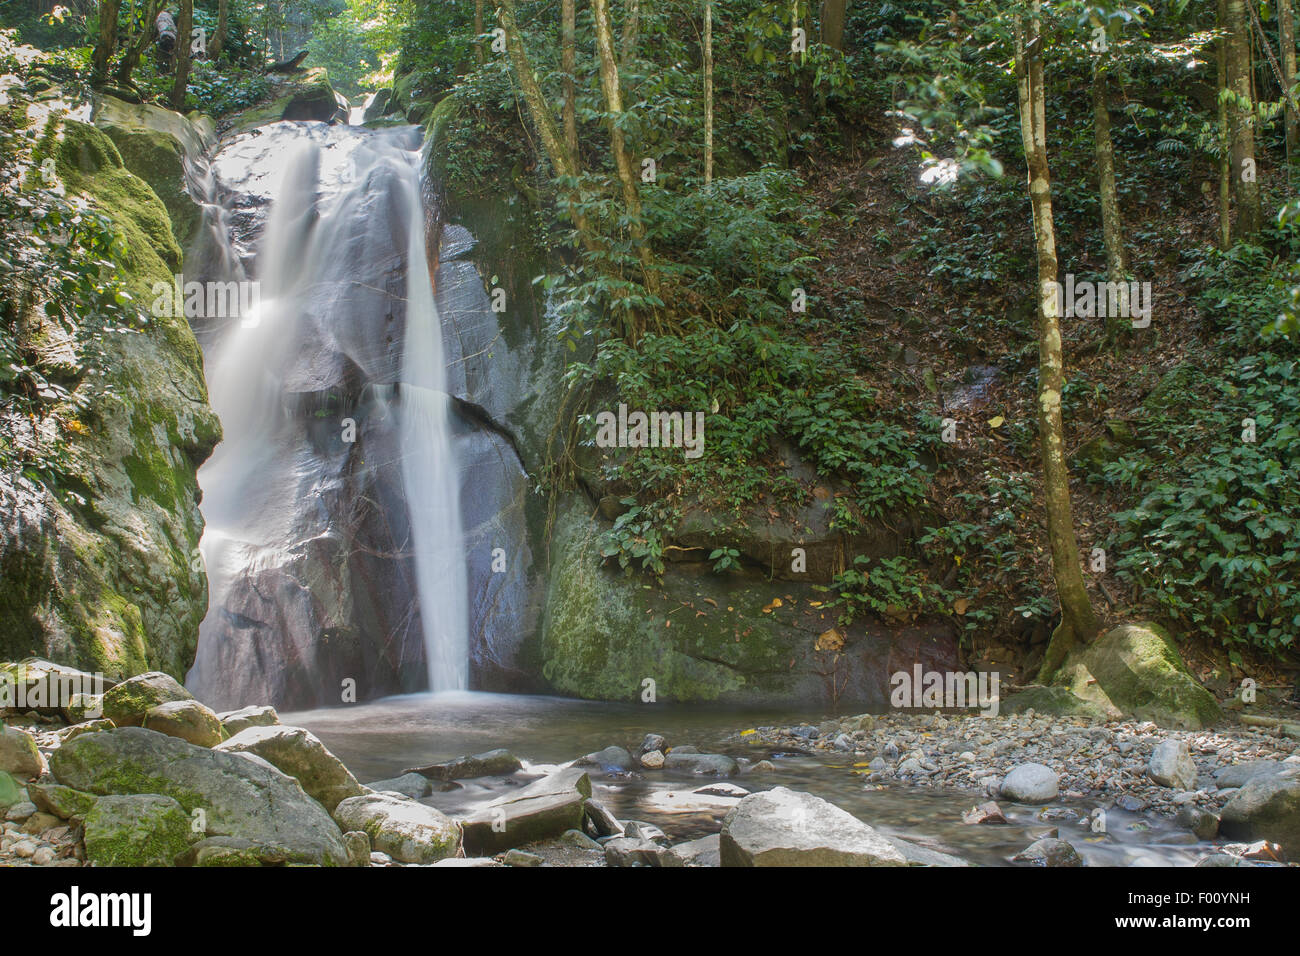 Waterfall at Poring Hot Springs, Malaysian Borneo. Stock Photo